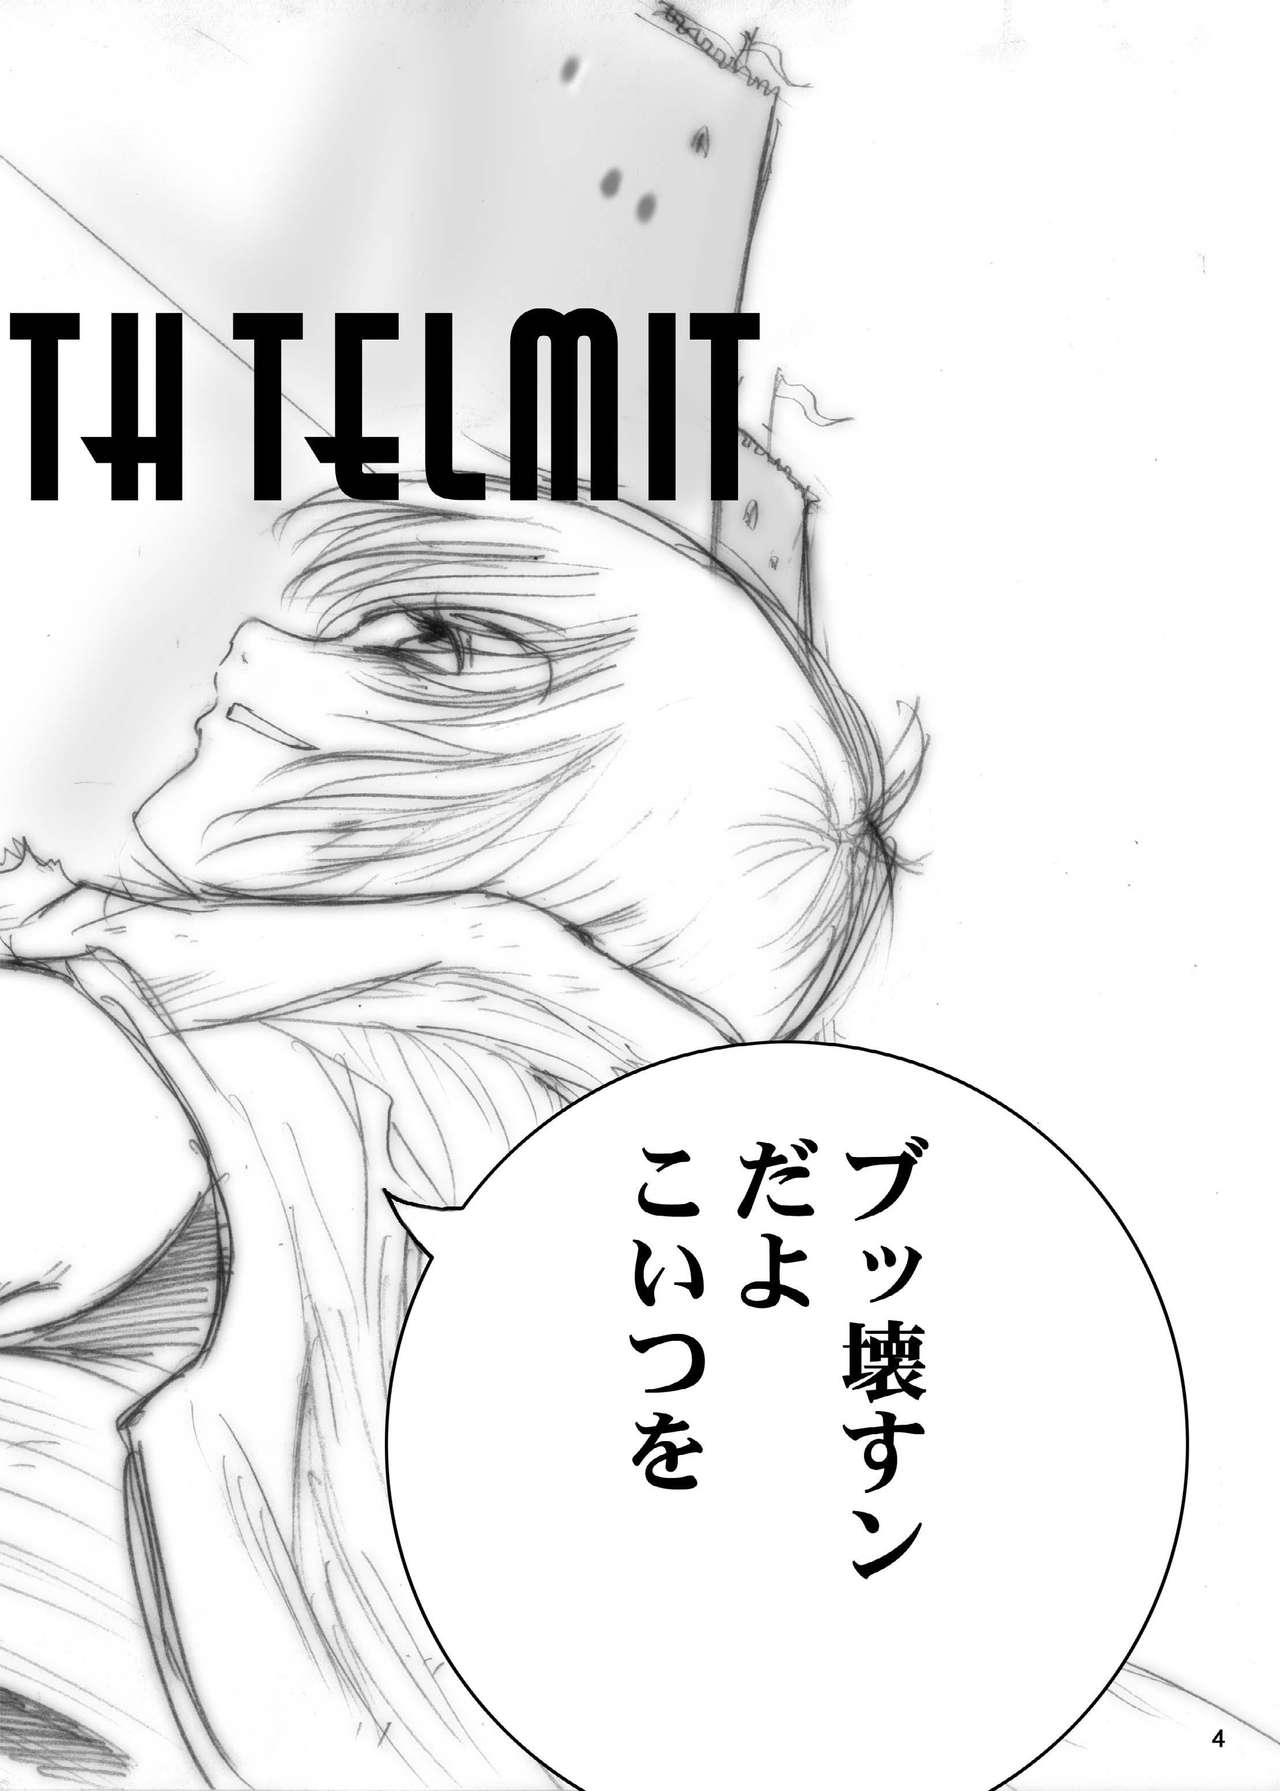 [Ikebukuro DPC] Interview with Telmit [池袋DPC] Interview with Telmit